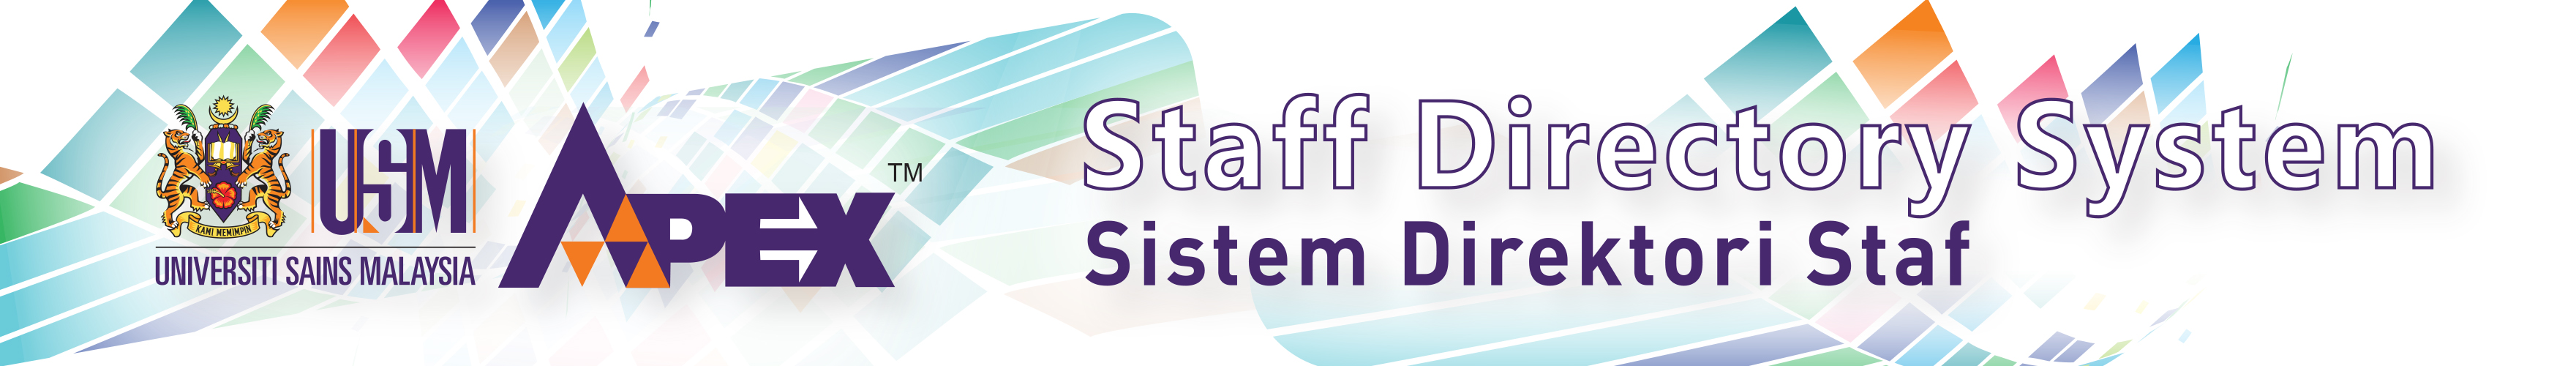 USM Staff Directory - Department / school